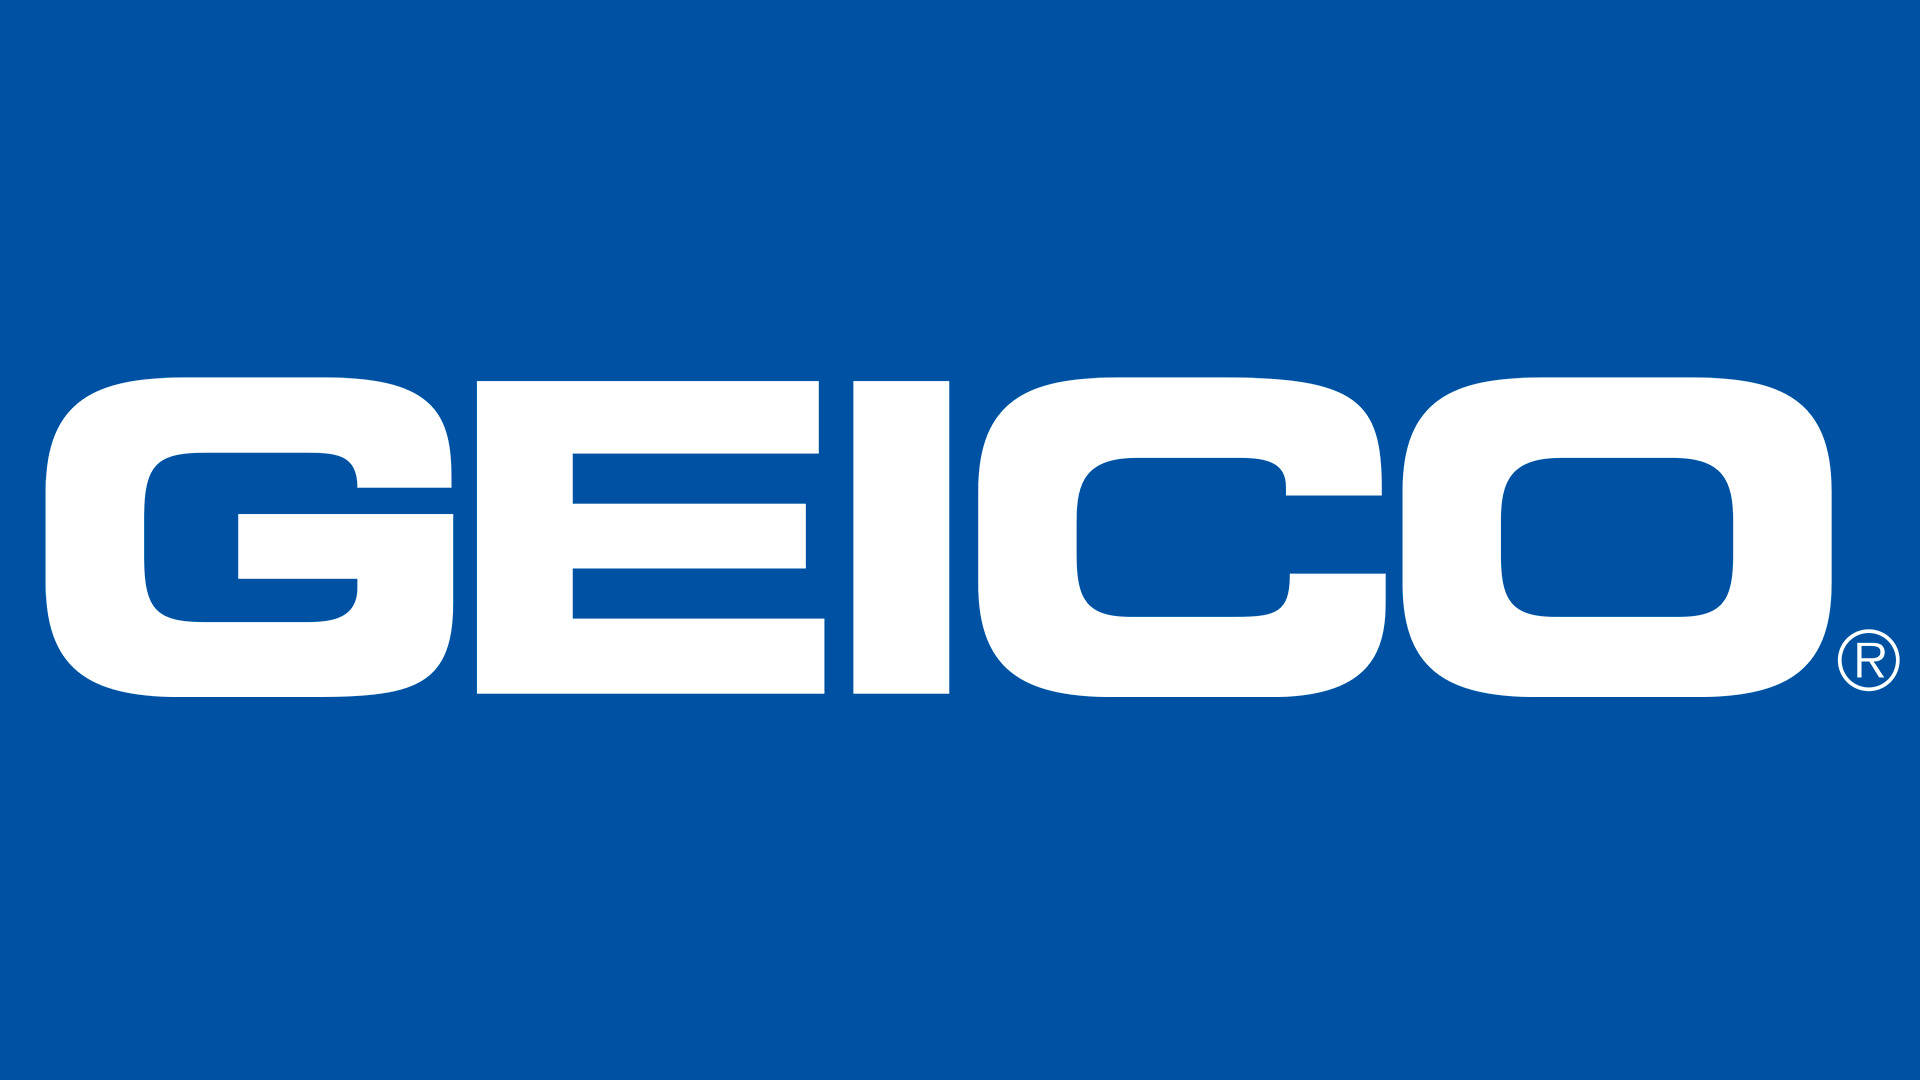 Simple Geico Logo Wallpaper